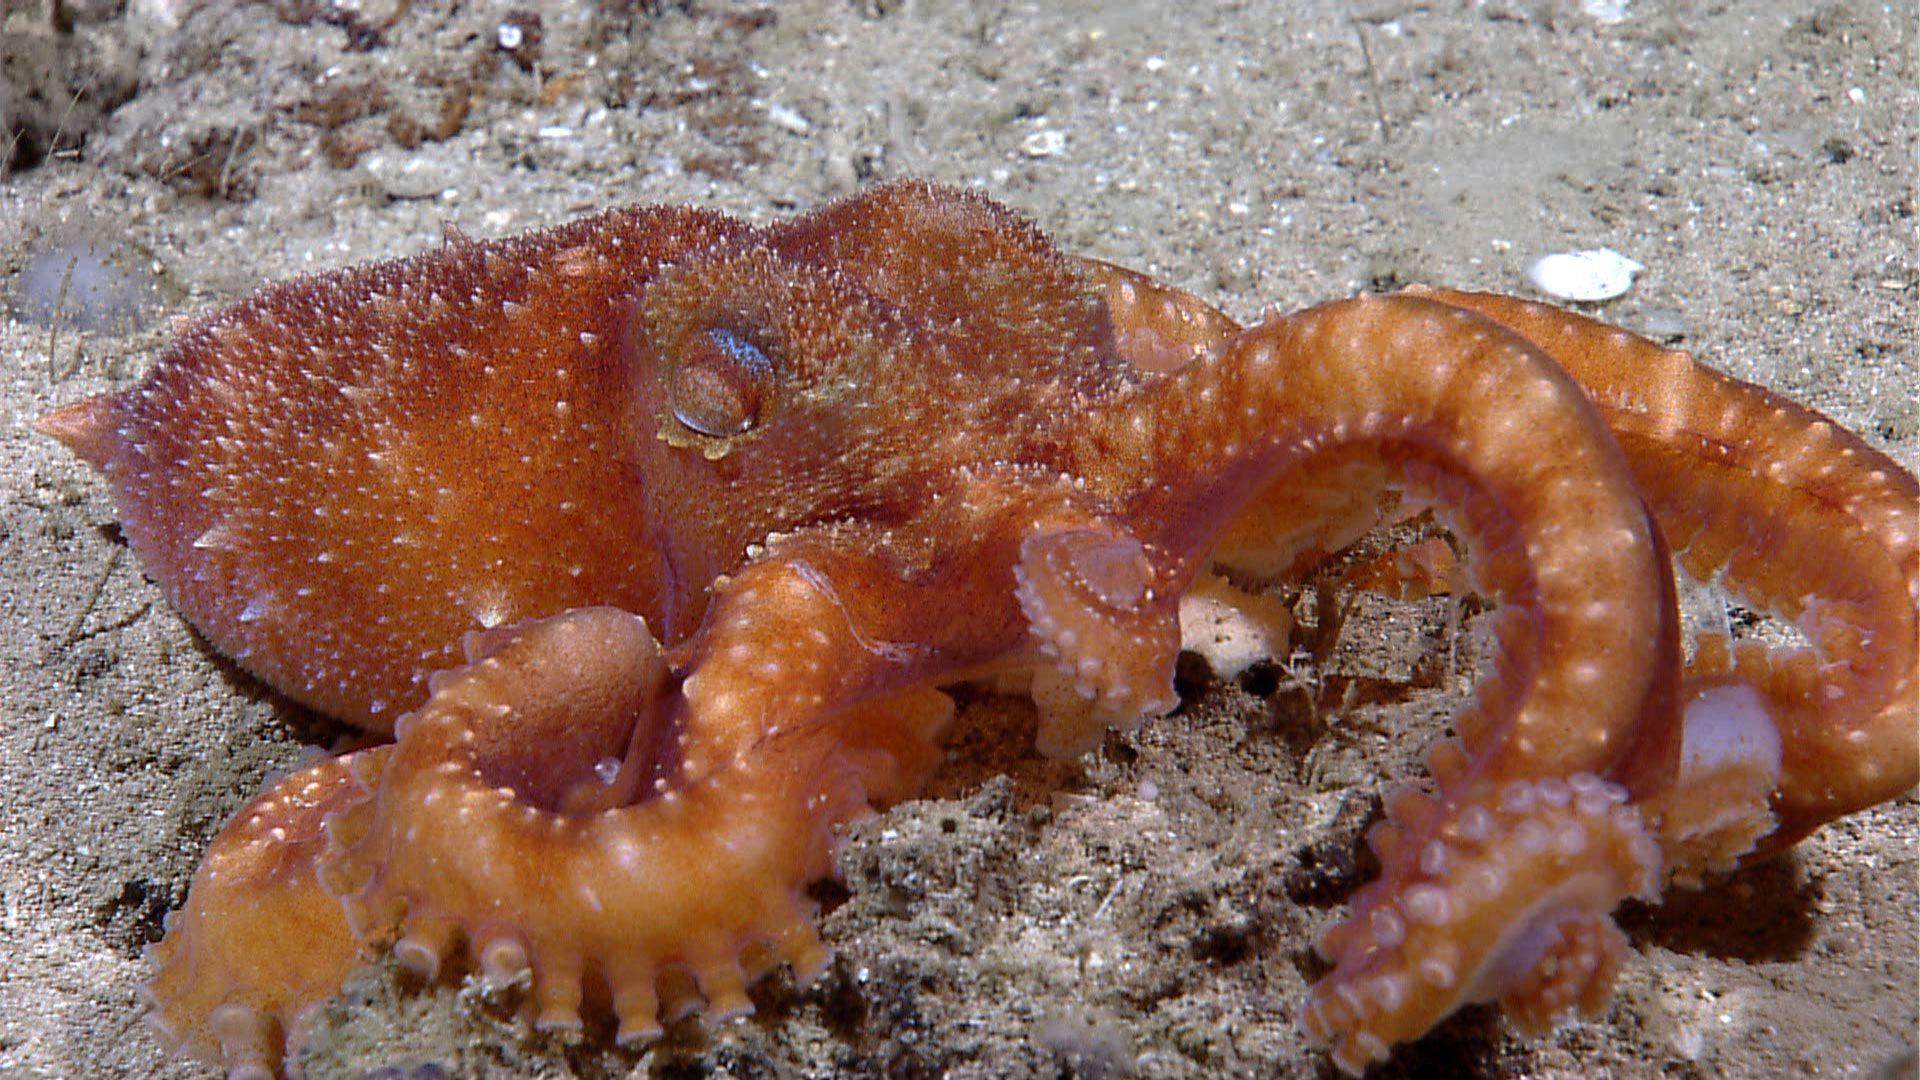 NOAA Ocean Explorer: For Fun: Octopus Friday Image Gallery